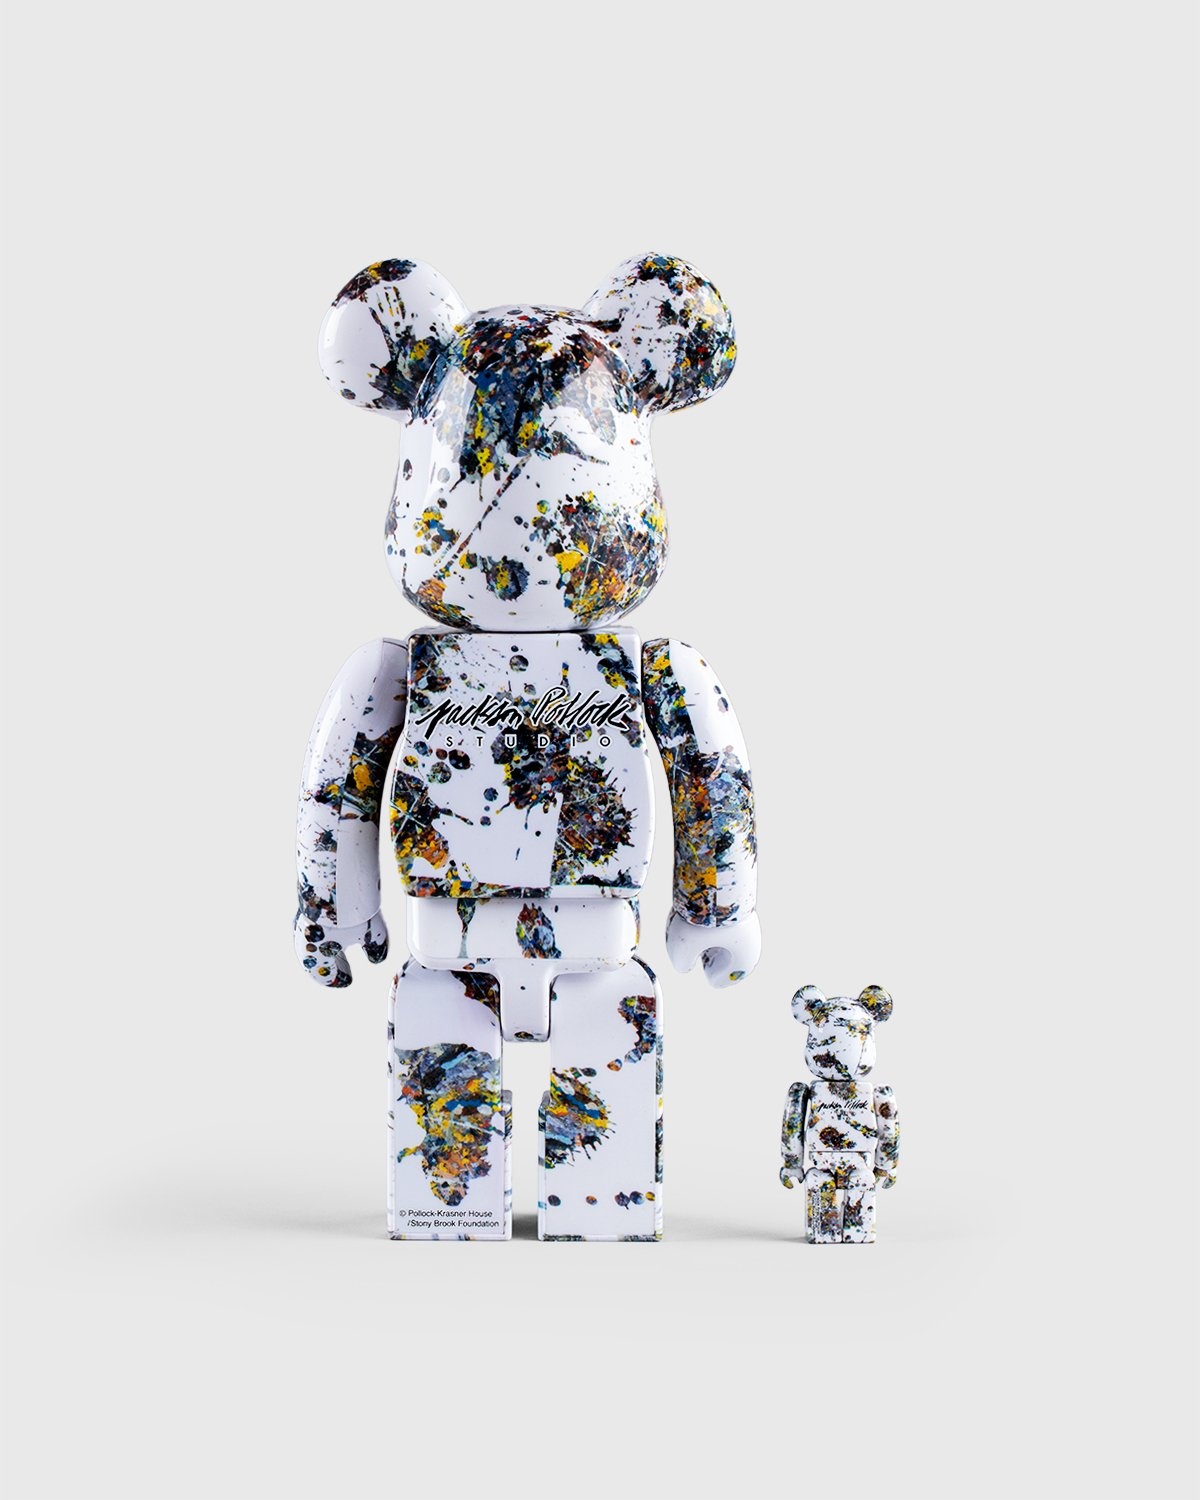 Medicom – Be@rbrick Jackson Pollock Studio Splash 100% and 400% Set - Arts & Collectibles - Multi - Image 2